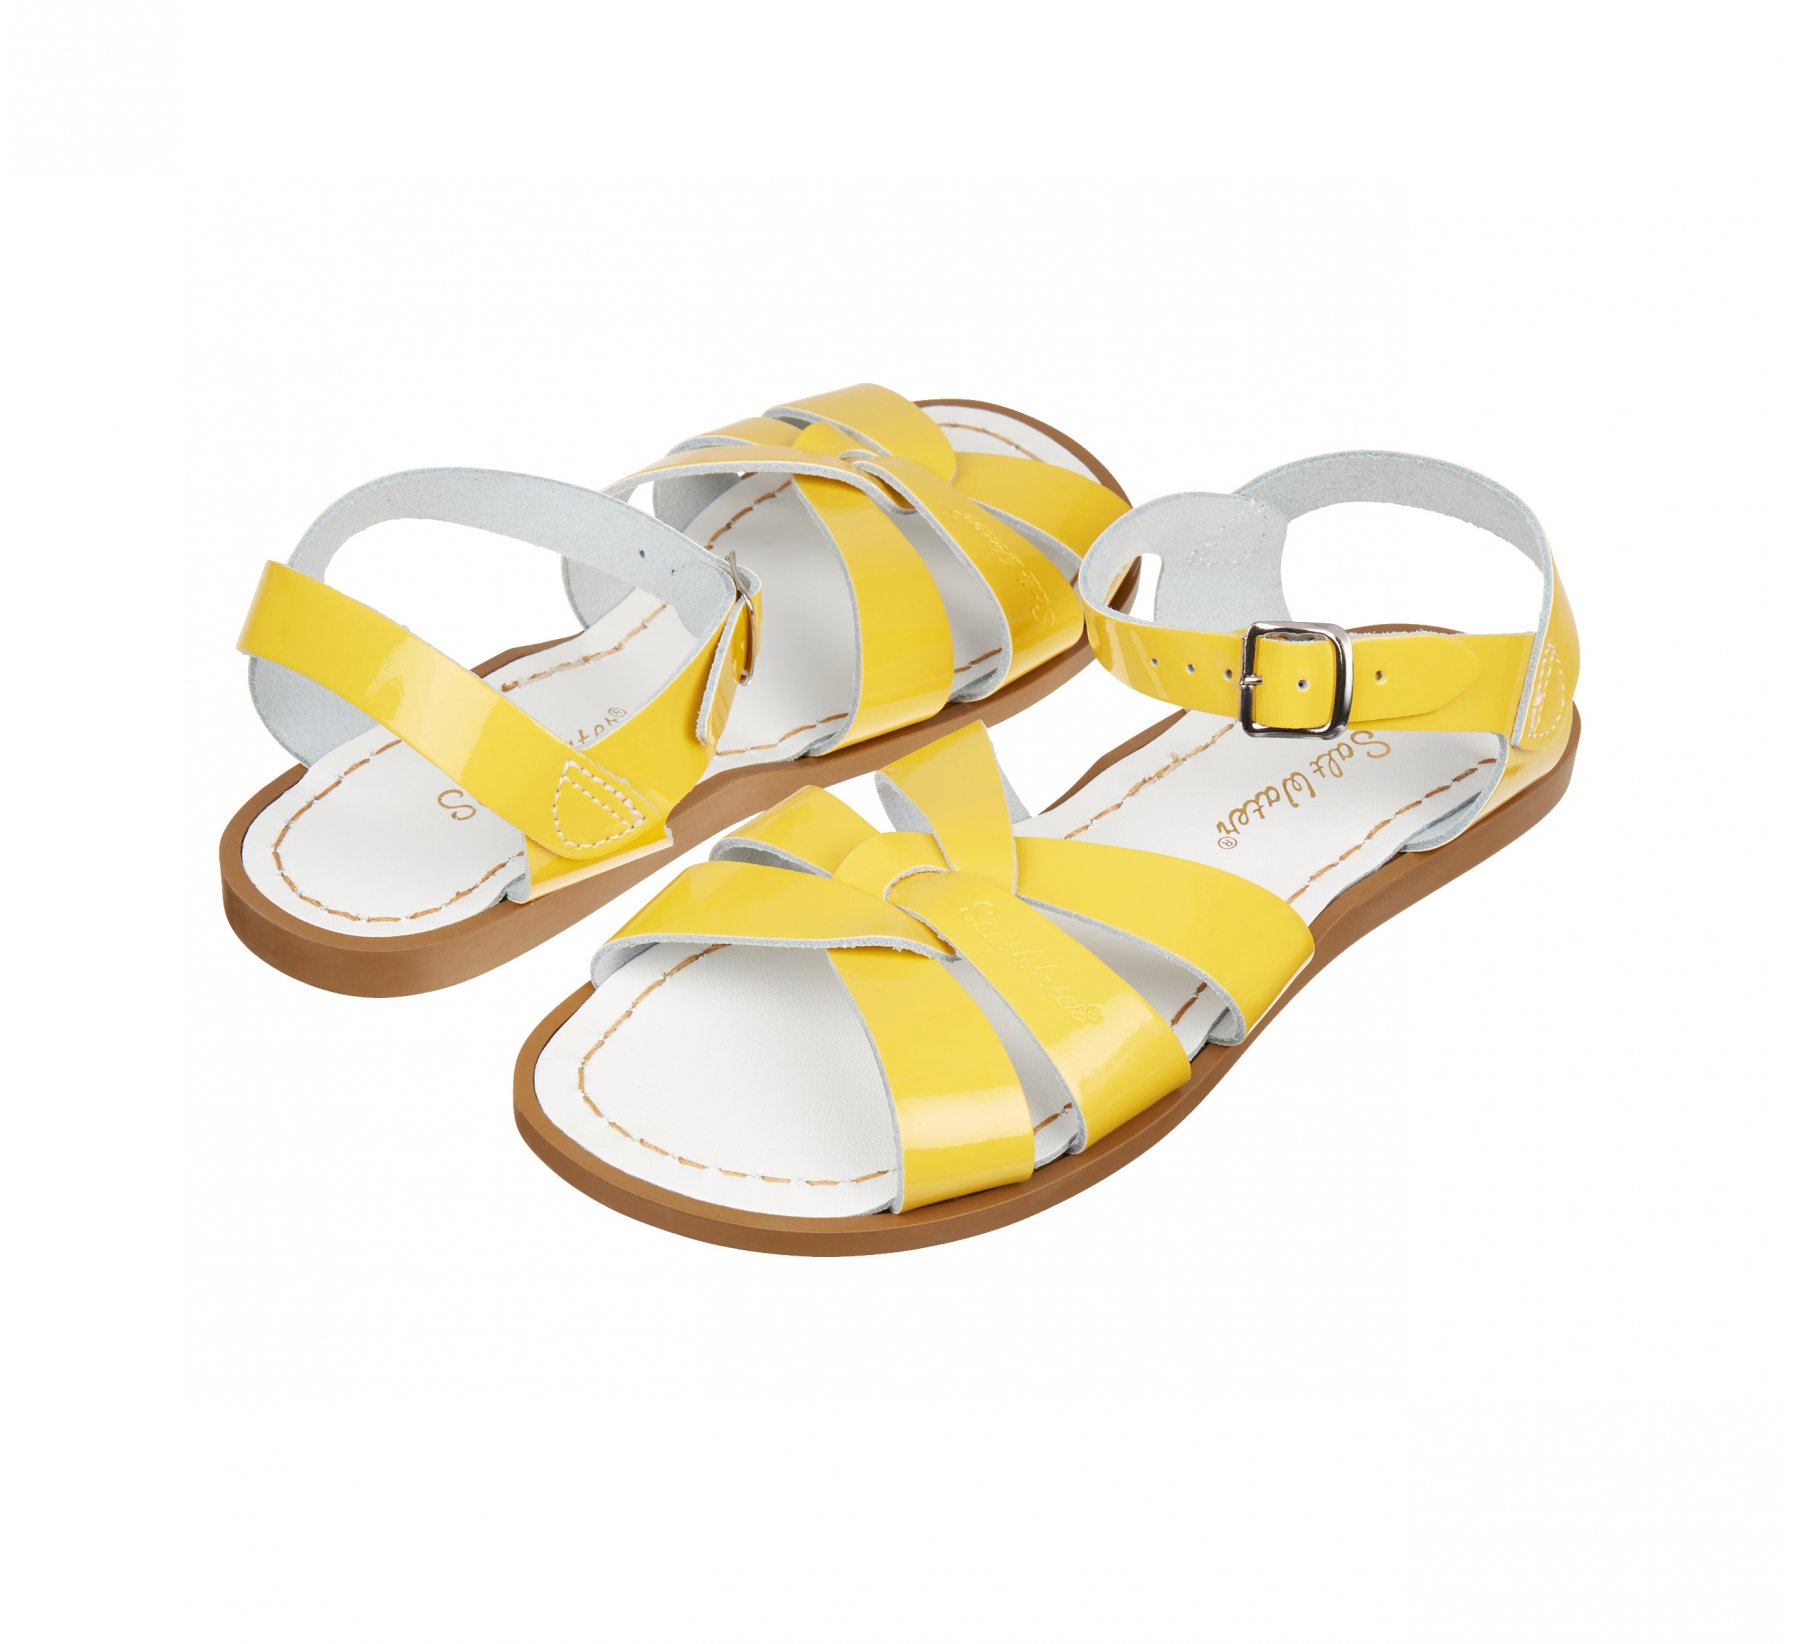 Original Shiny Yellow Kids Sandals - Salt Water Sandals